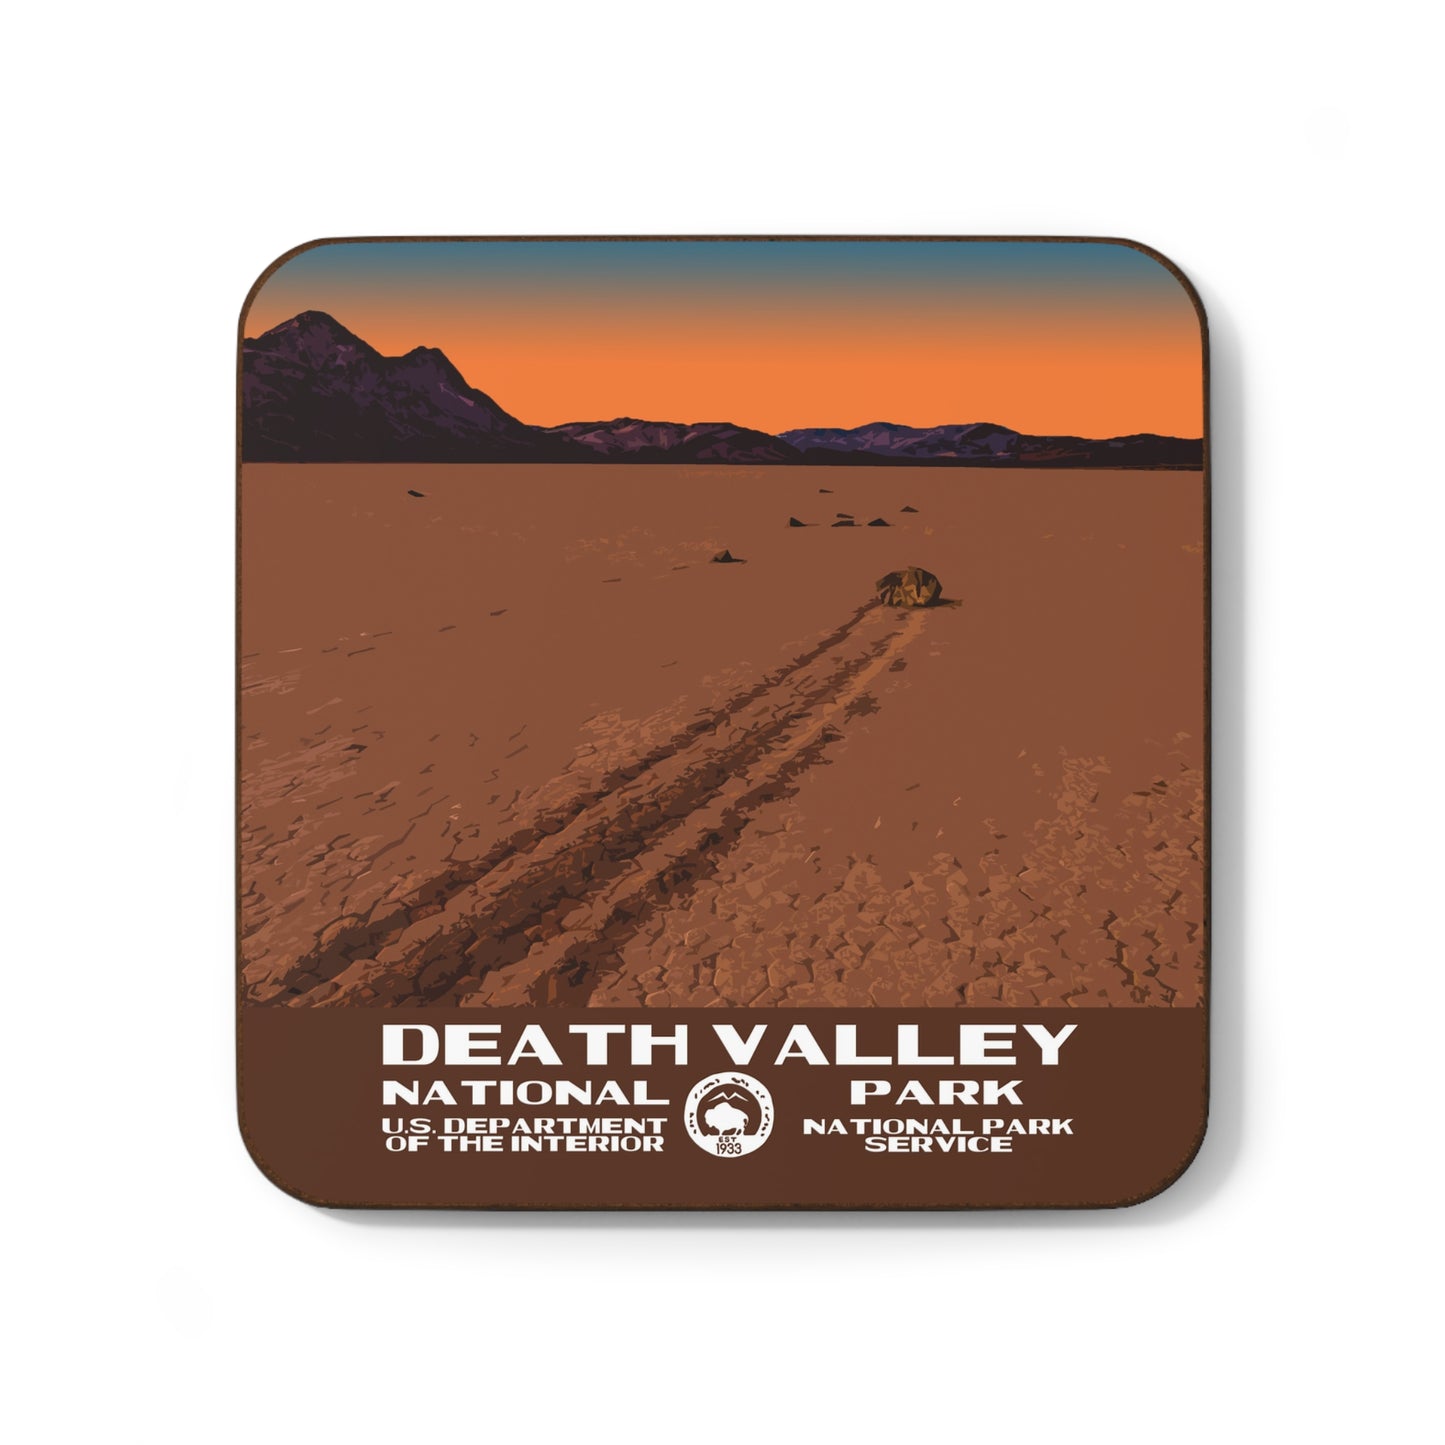 Death Valley National Park Coaster - Racetrack Playa